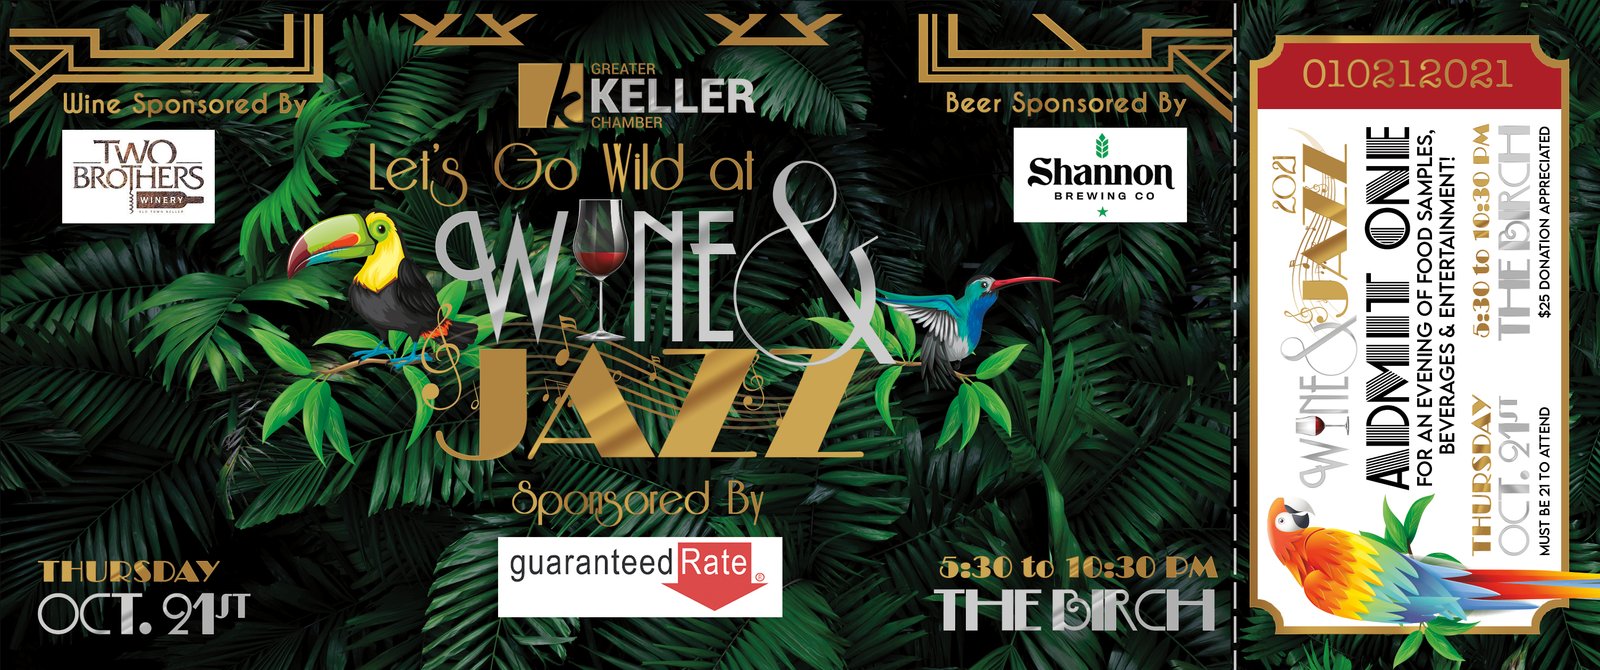 Greater Keller Chamber of Commerce Wine & Jazz 2021 promotion